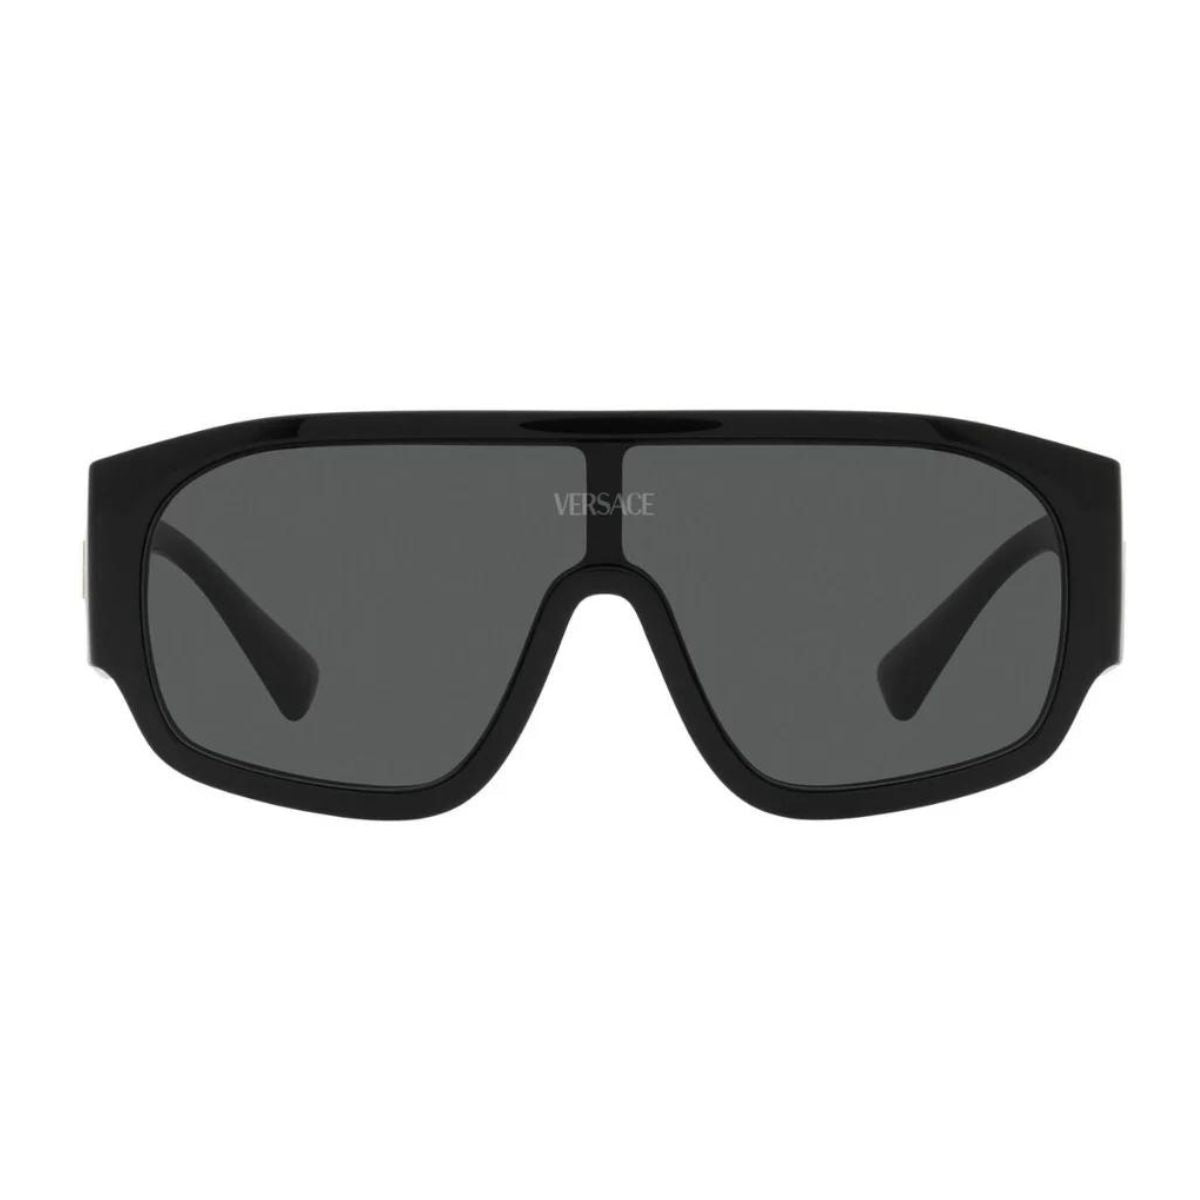 "Versace 4439 GB1/87 Trendy Eyewear Sunglasses For Men And Women At Optorium"